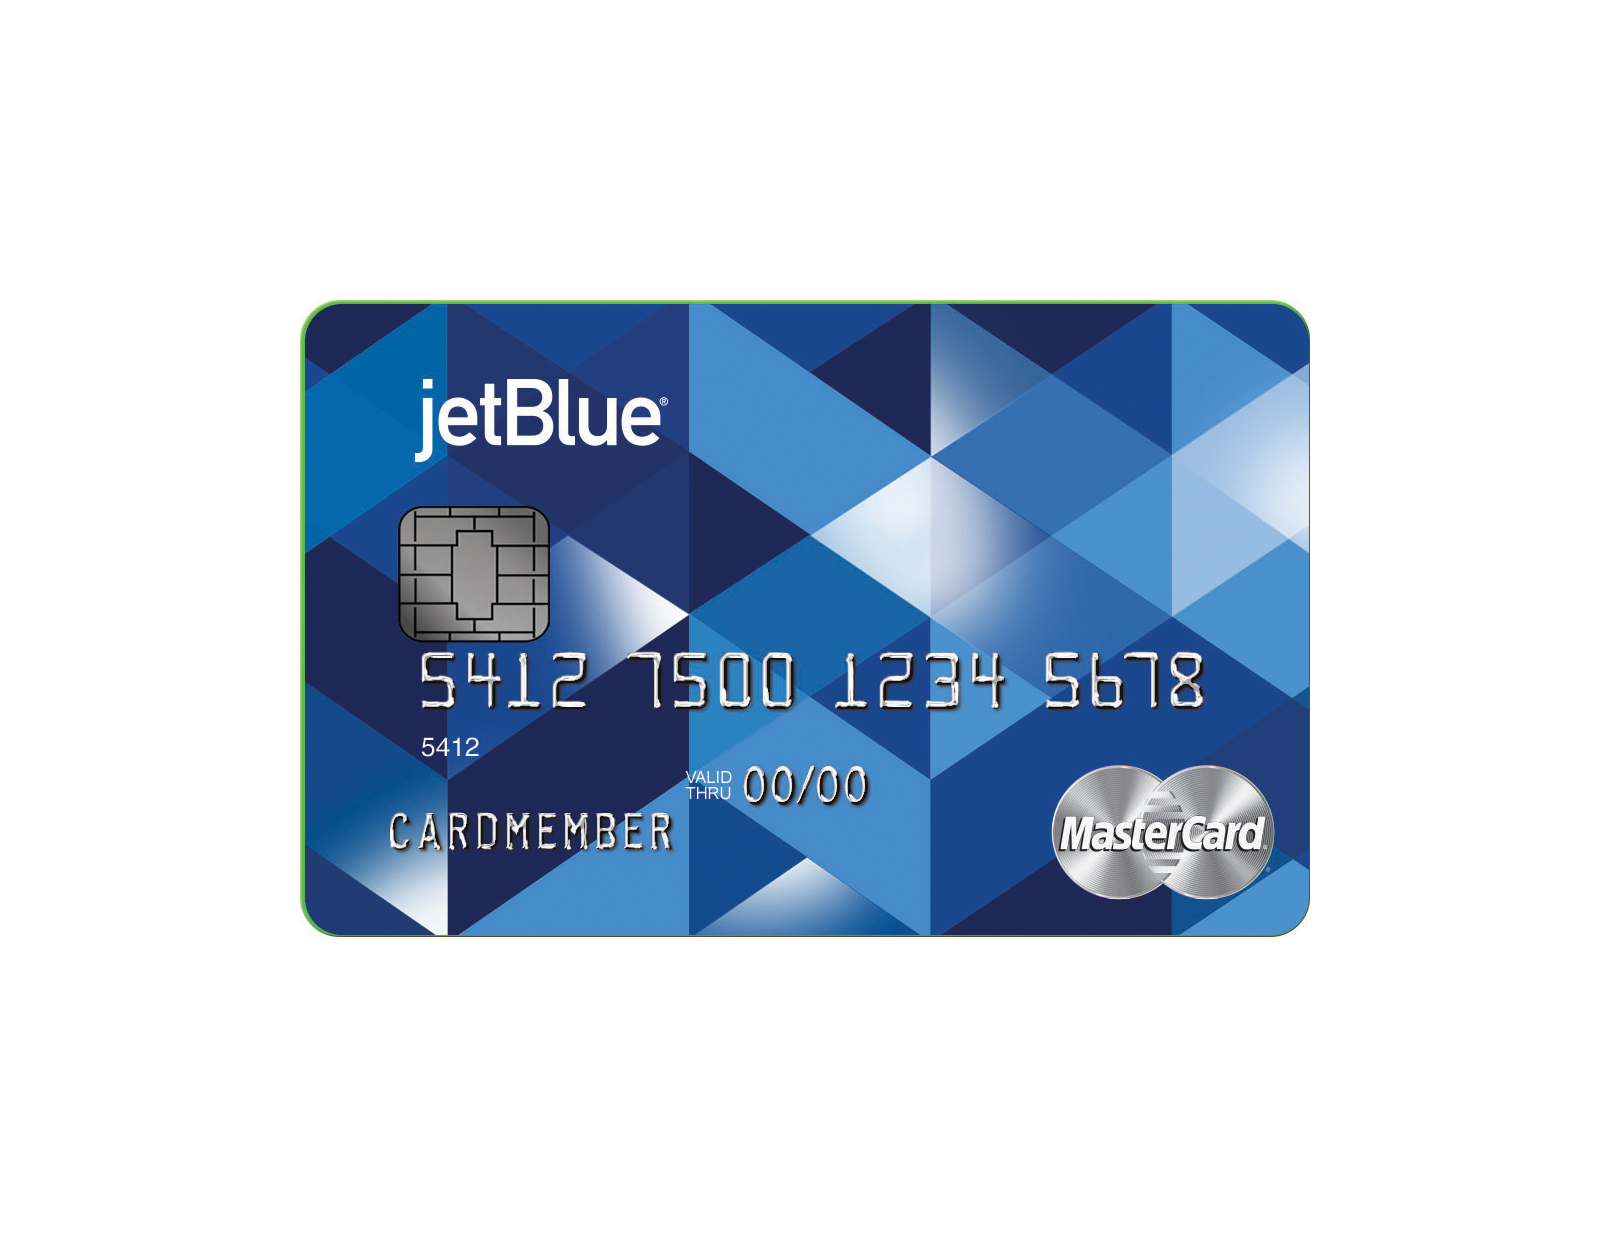 jetblue mastercard account login